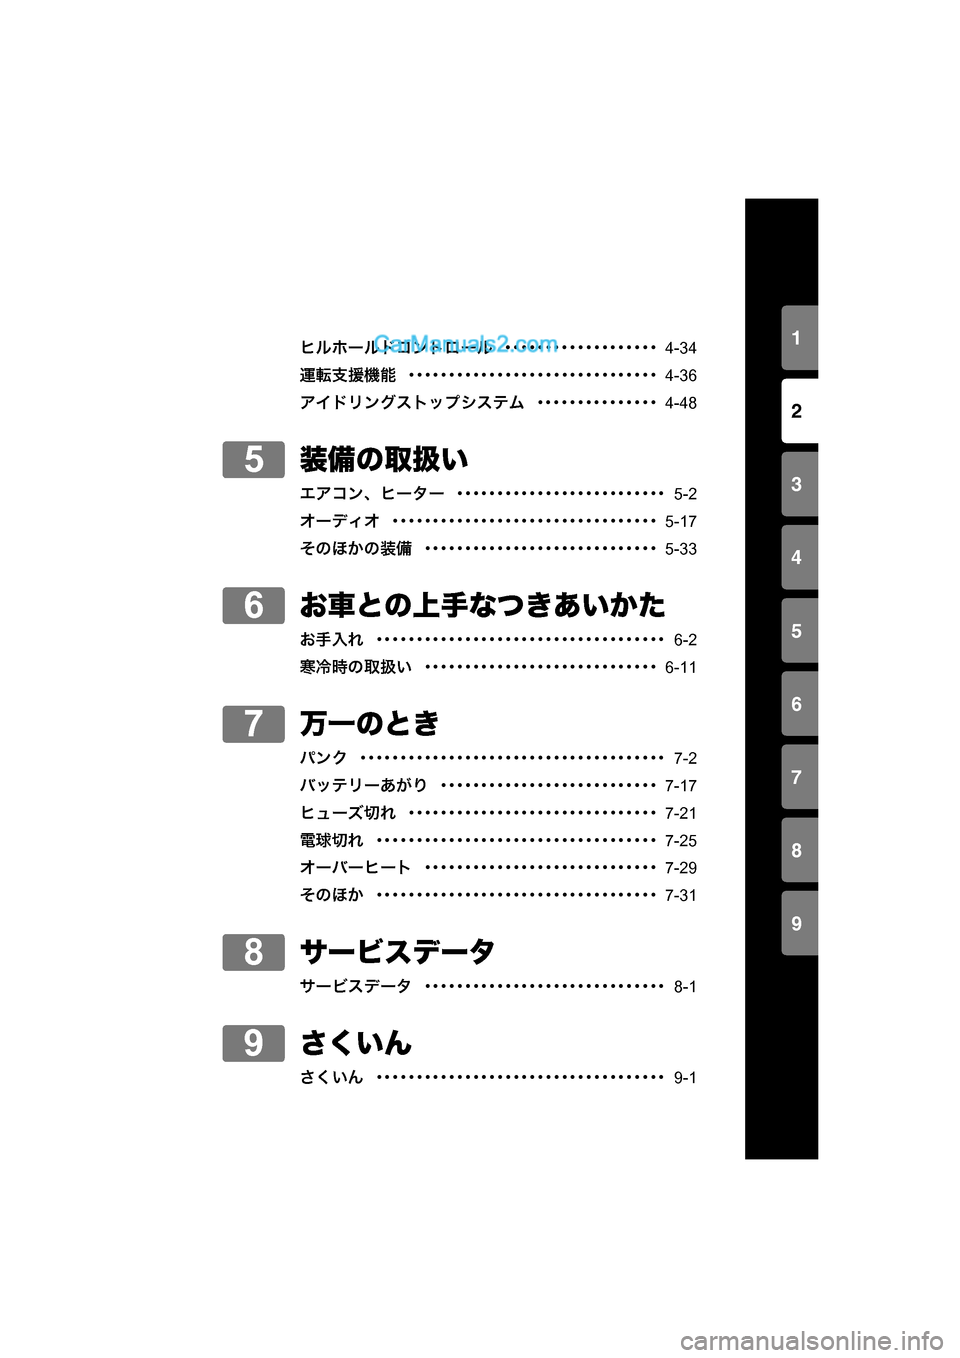 MAZDA MODEL CARROL 2015  取扱説明書 (キャロル) (in Japanese) 1
2
3
4
5
6
7
8
9
1-2
ヒルホールドコントロール  ･･･････････････････  
4-34
運転支援機能  ･･････････････････�